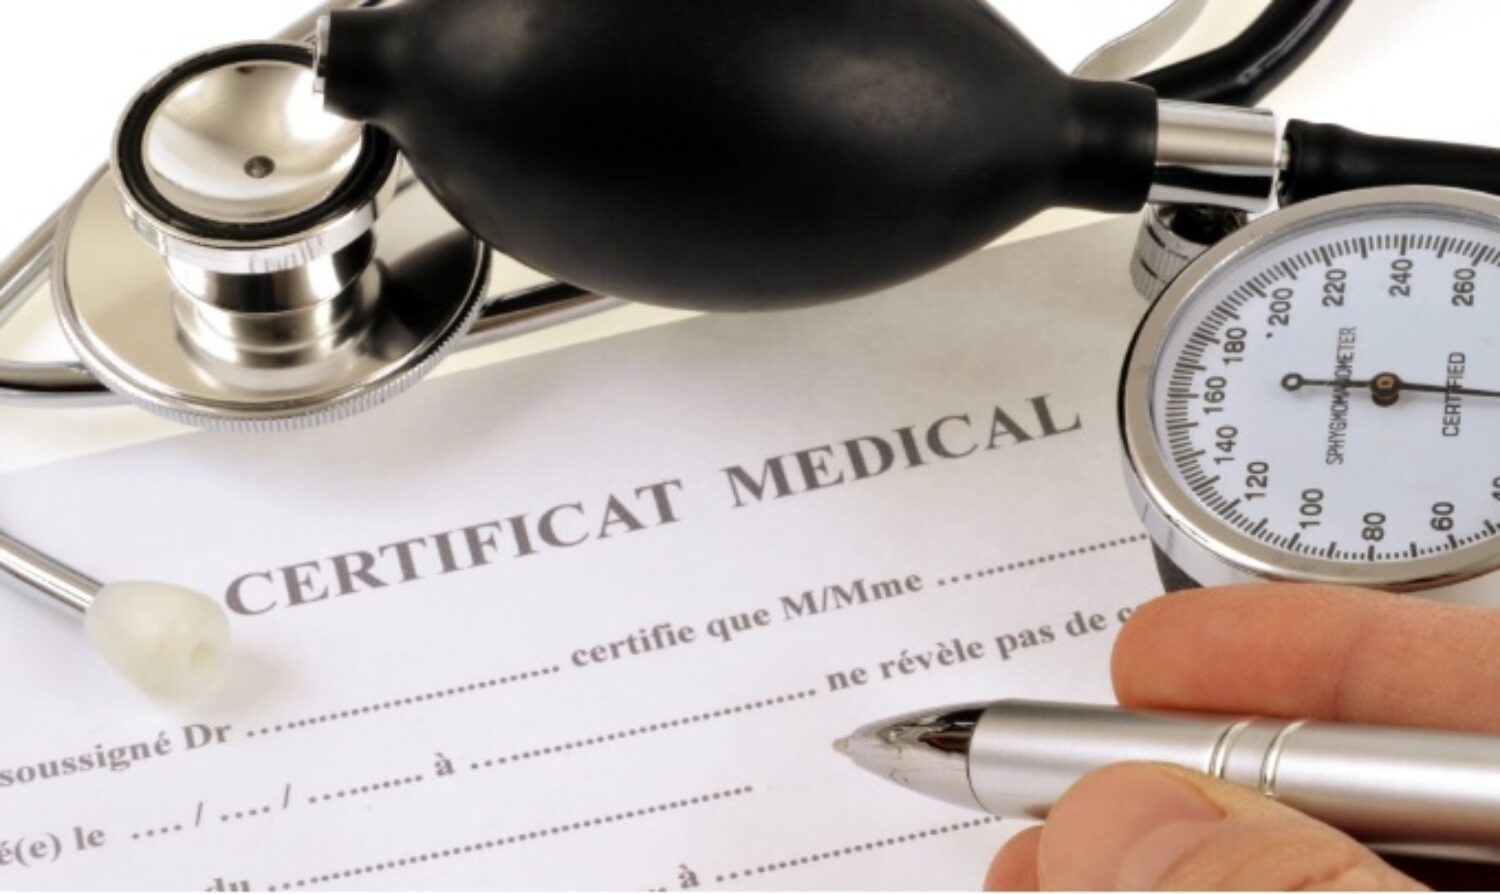 Medical Certificates